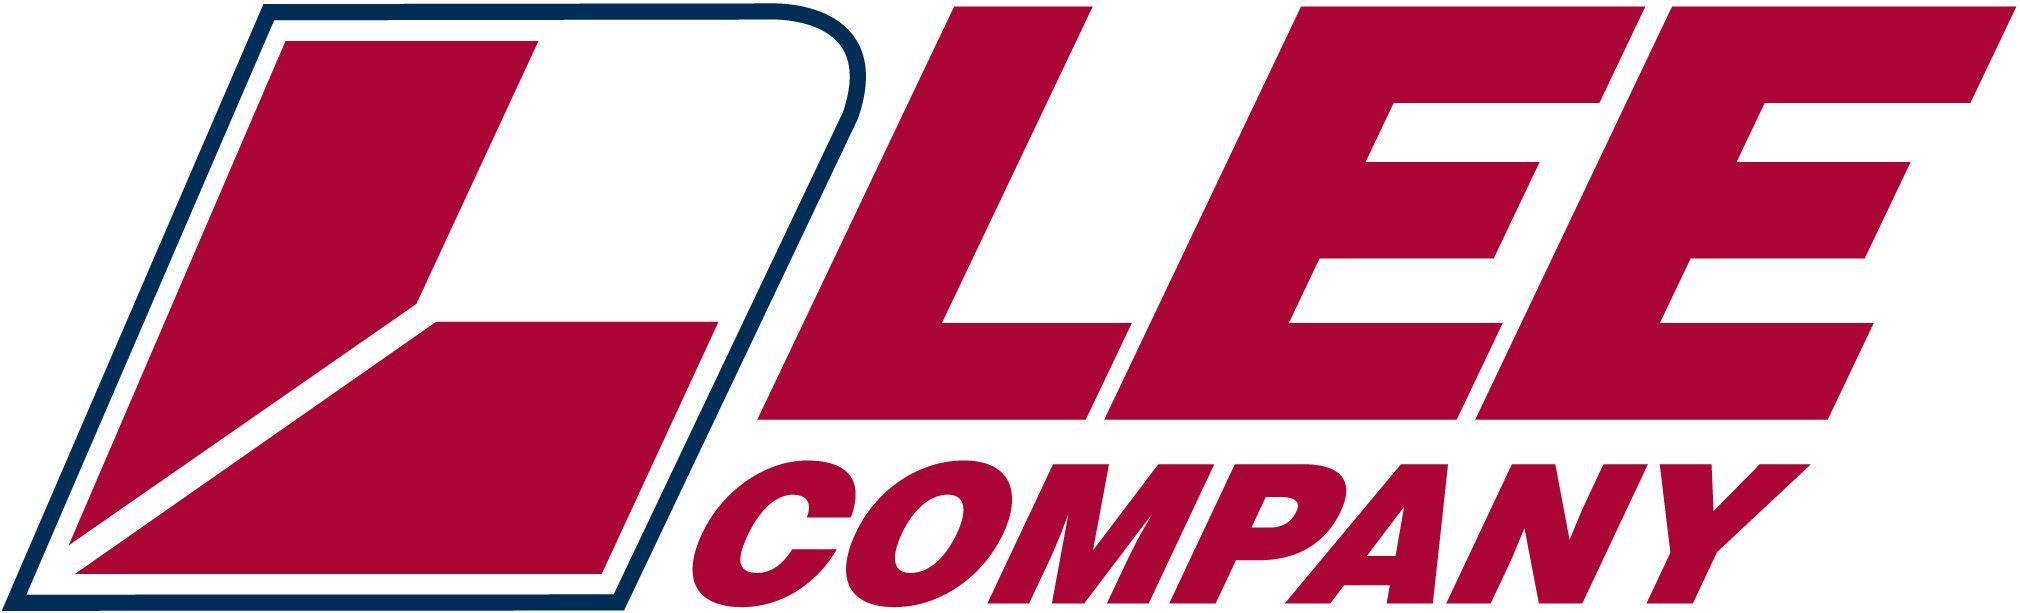 Lee Company Logo - Lee Company | Nashville Area Chamber of Commerce